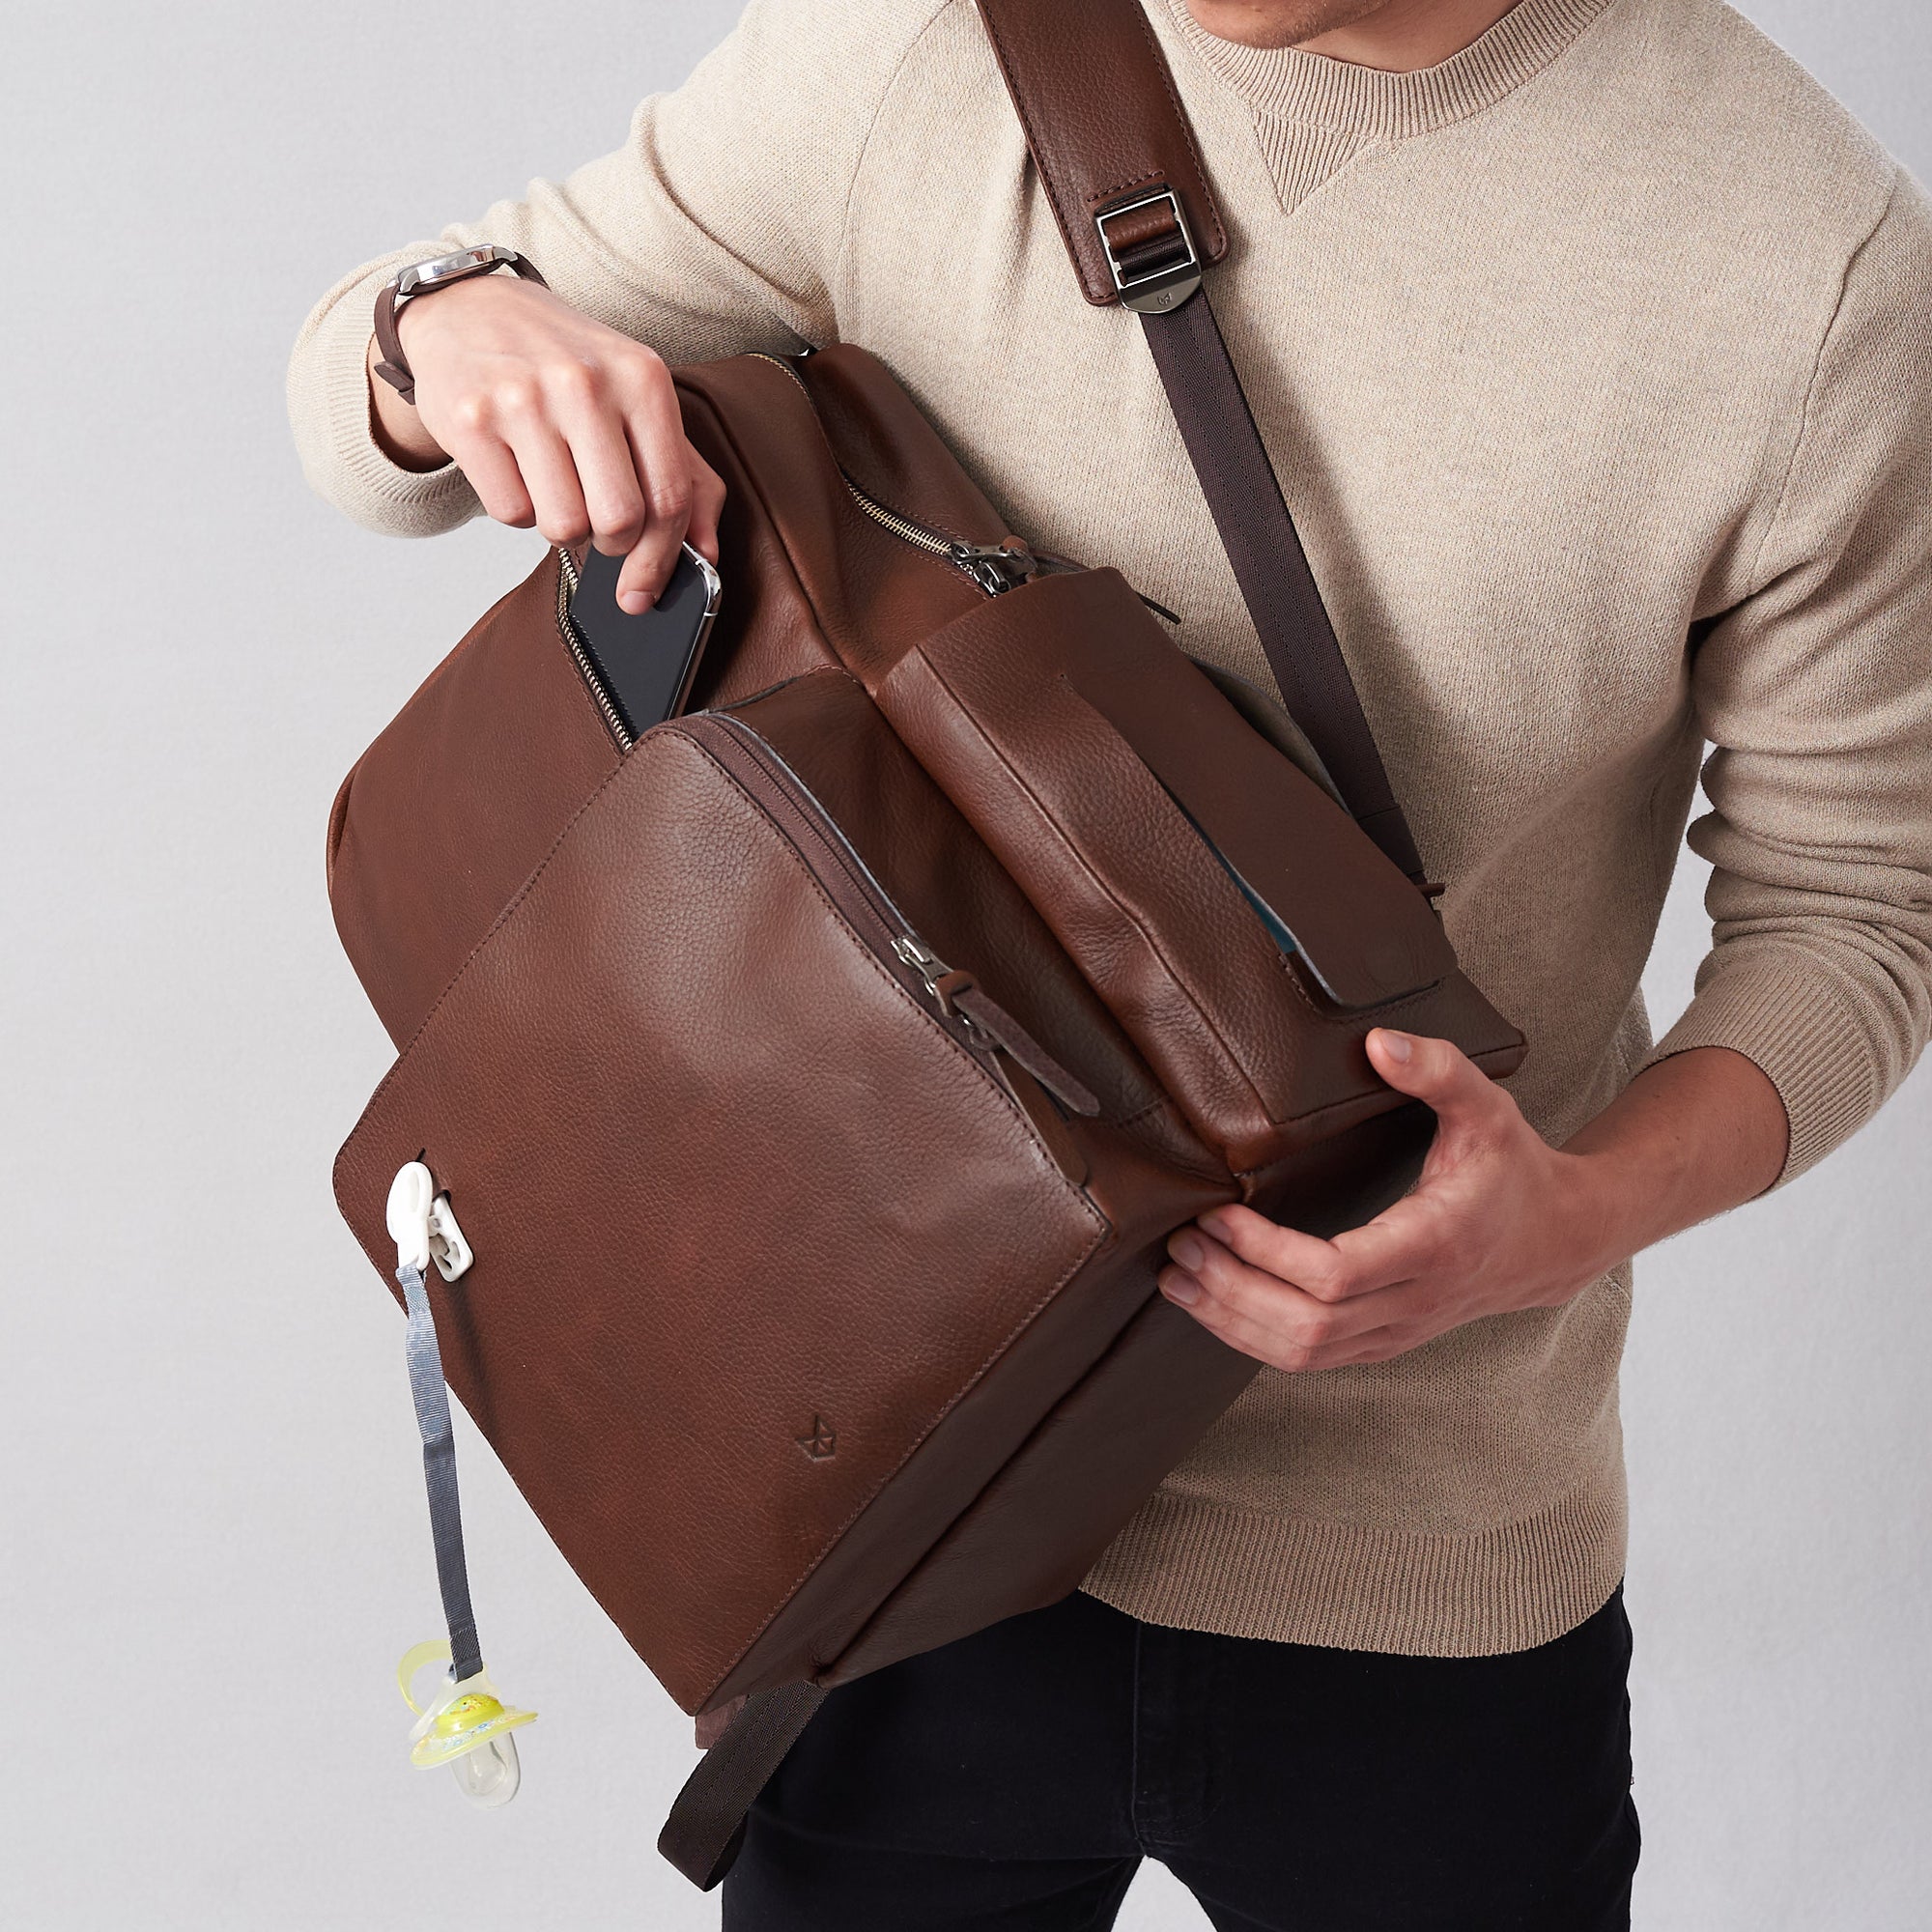 brown leather backpack diaper bag by capra